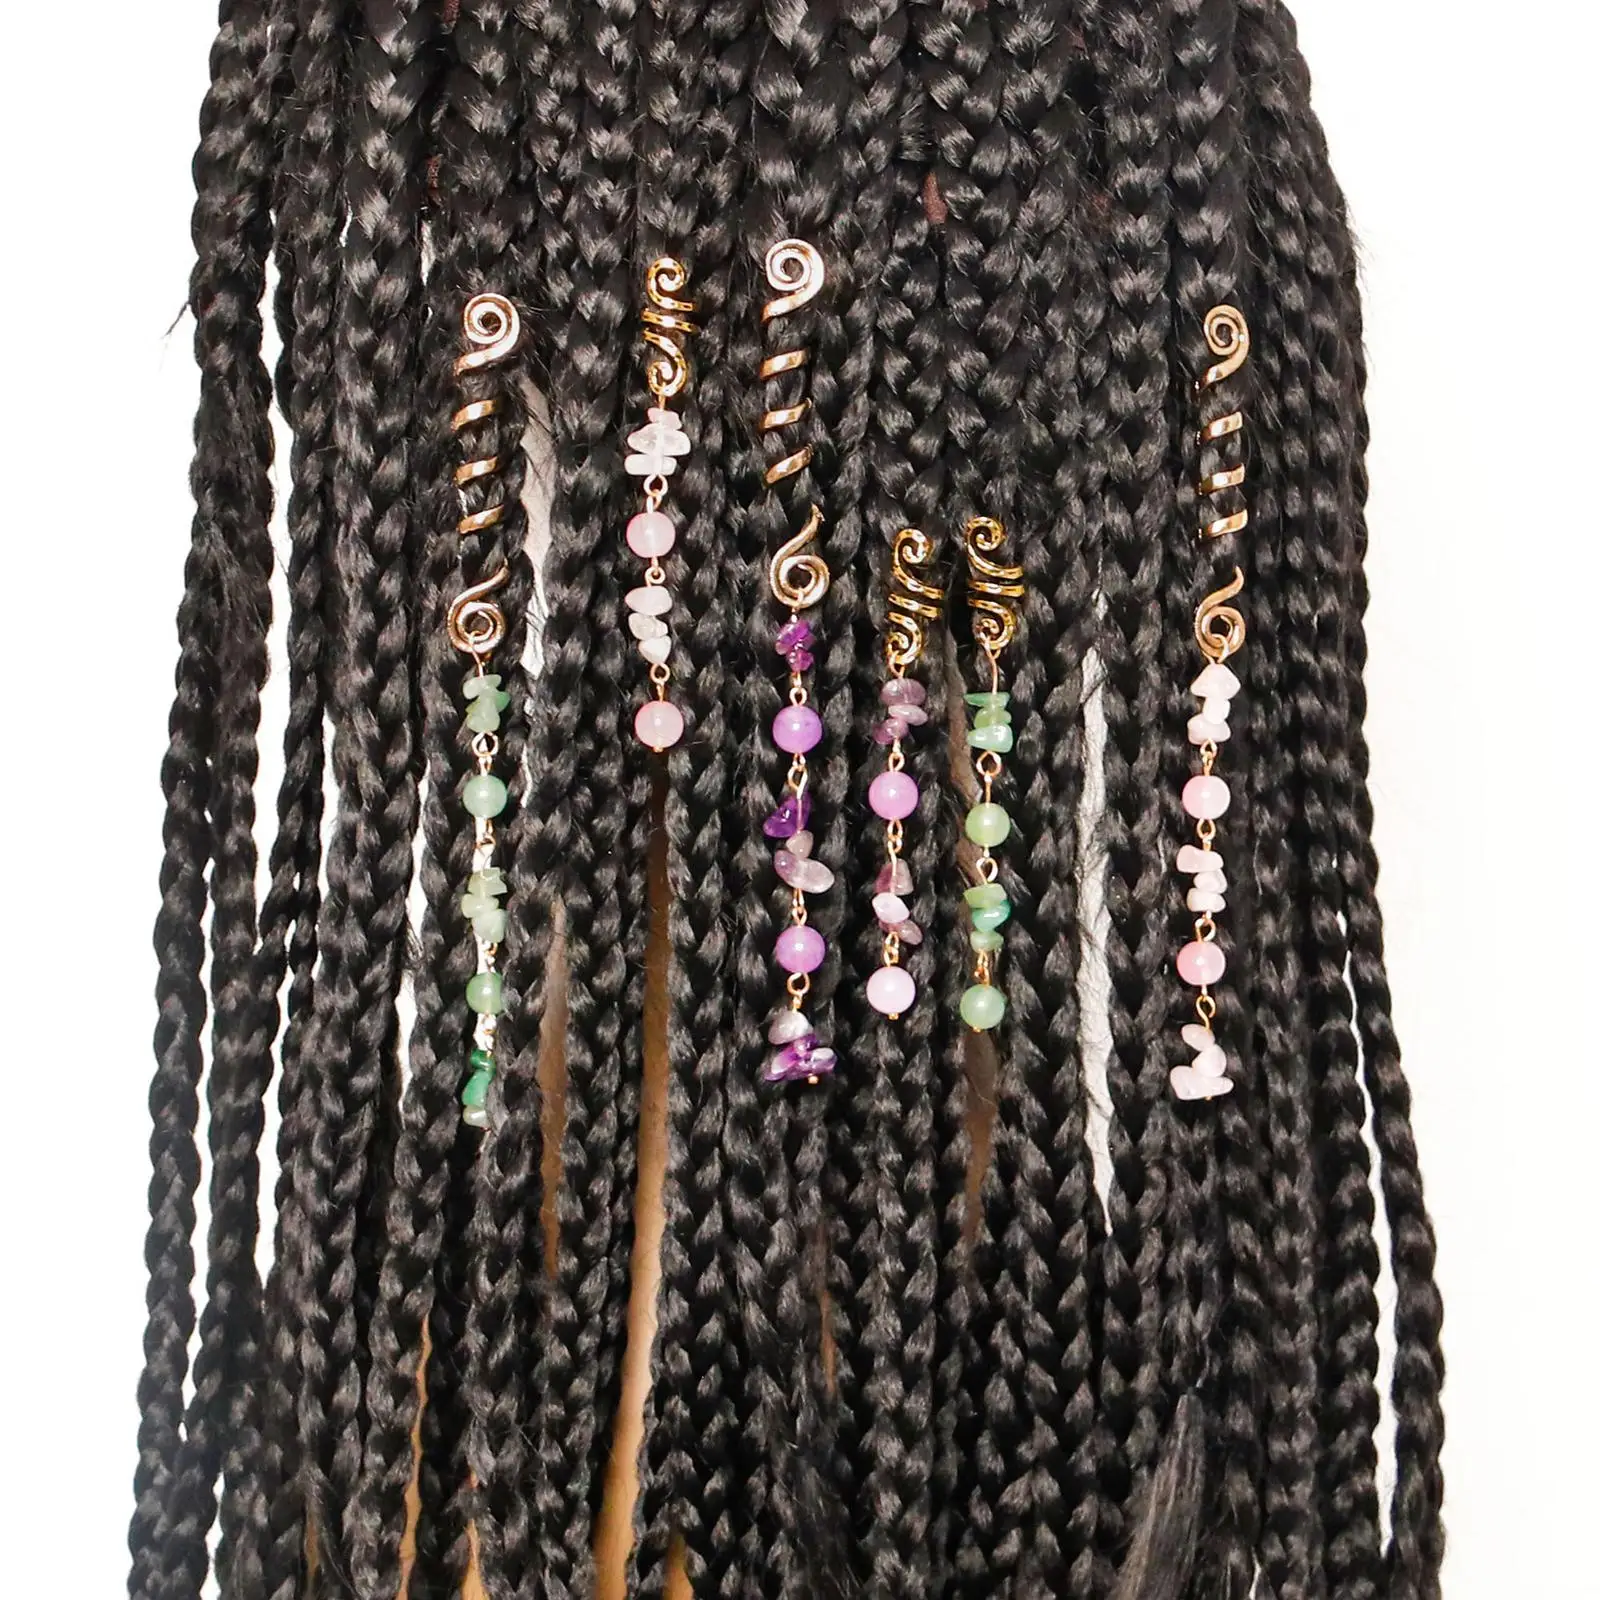 6Pcs Hair Jewelry Dreadlock Hair Clips Pendants Braiding DIY Decoration Alloy Dreadlock Accessories Hair Cuffs for Girls